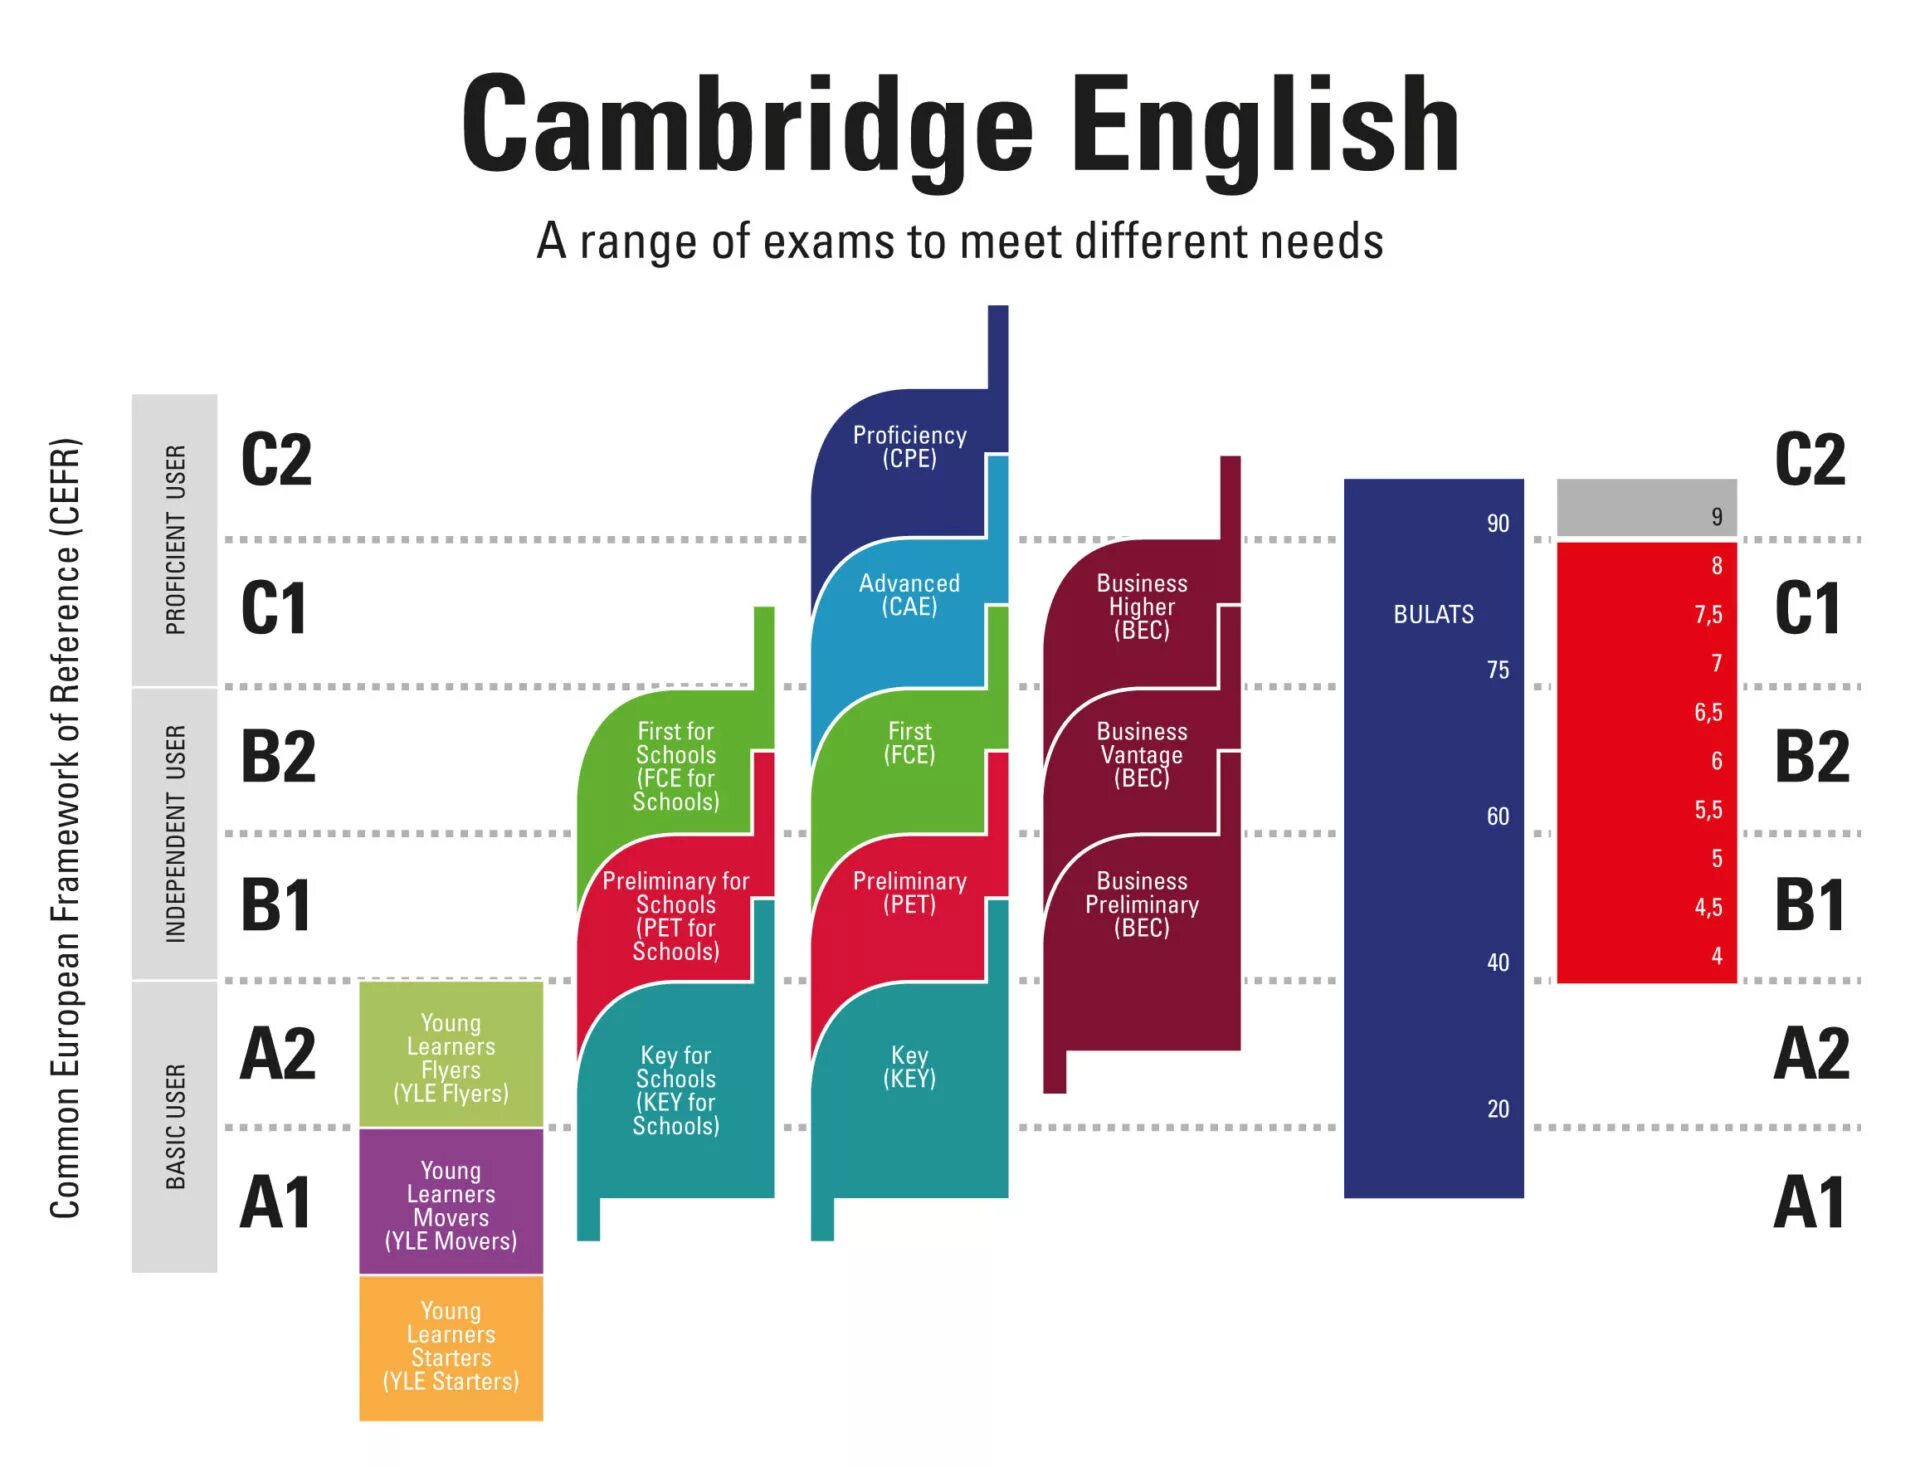 Cambridge english level. Шкала уровня английского языка Cambridge. Кембриджская шкала уровней английского языка. Экзамены Cambridge English уровни. Кембриджские экзамены Pet уровни.